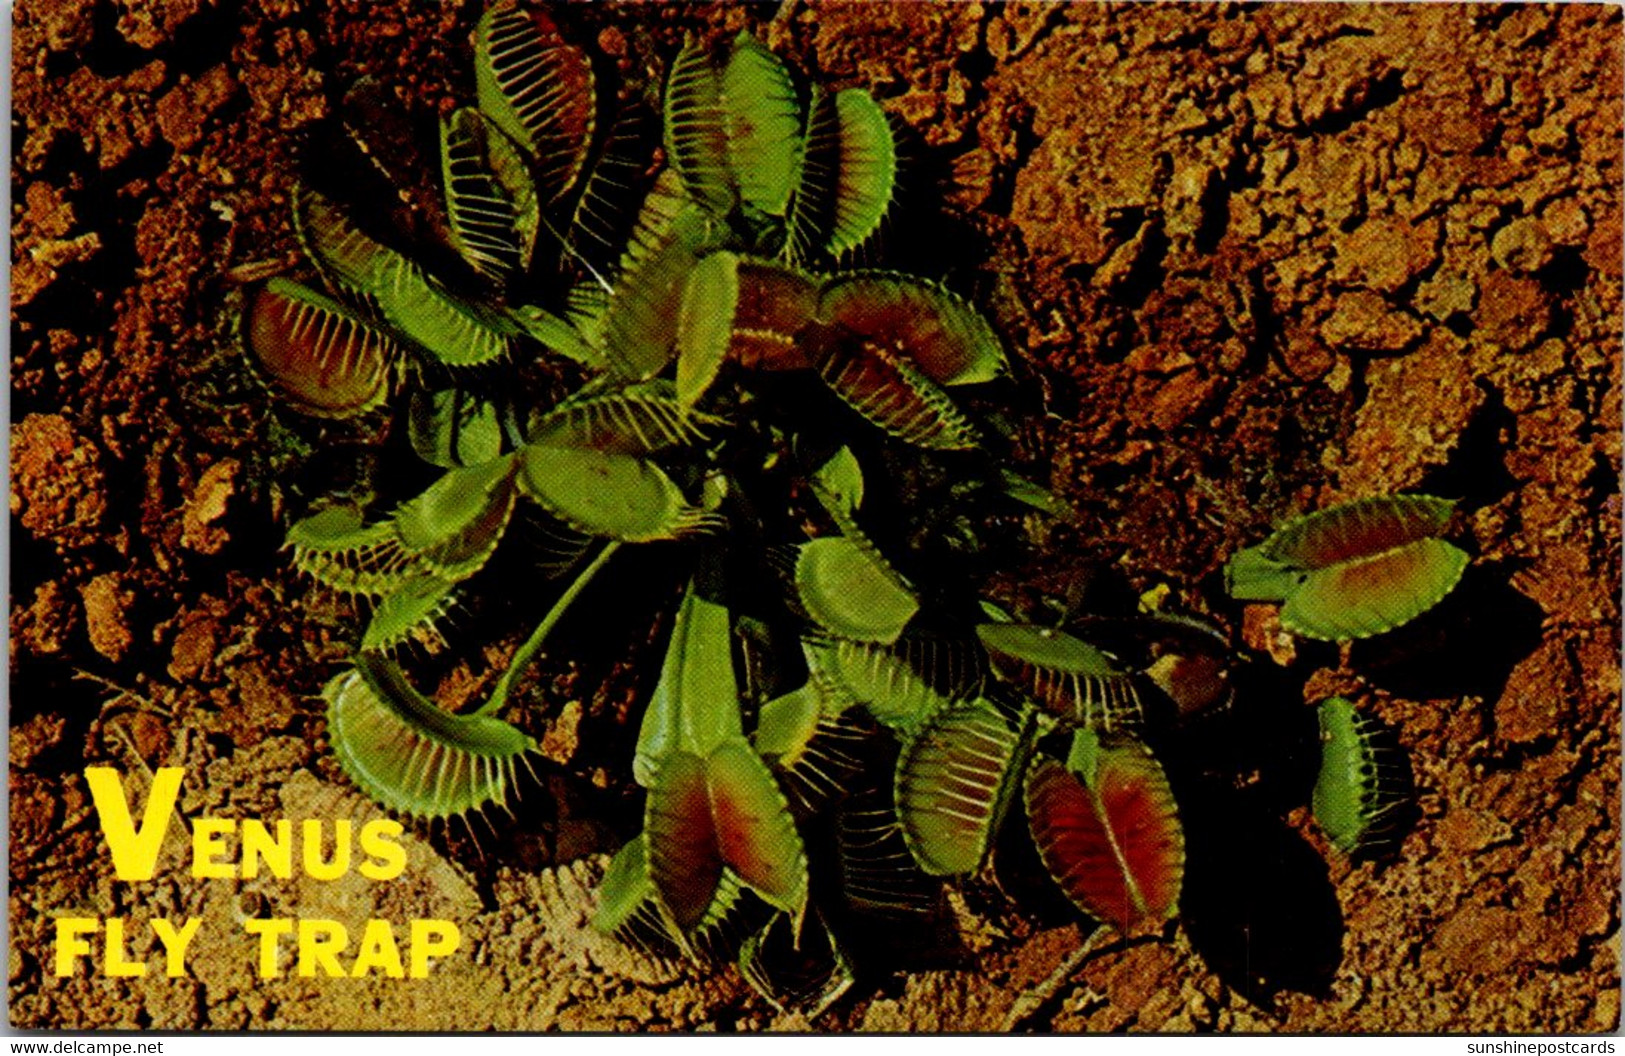 Plants Venus Fly Trap - Piante Velenose